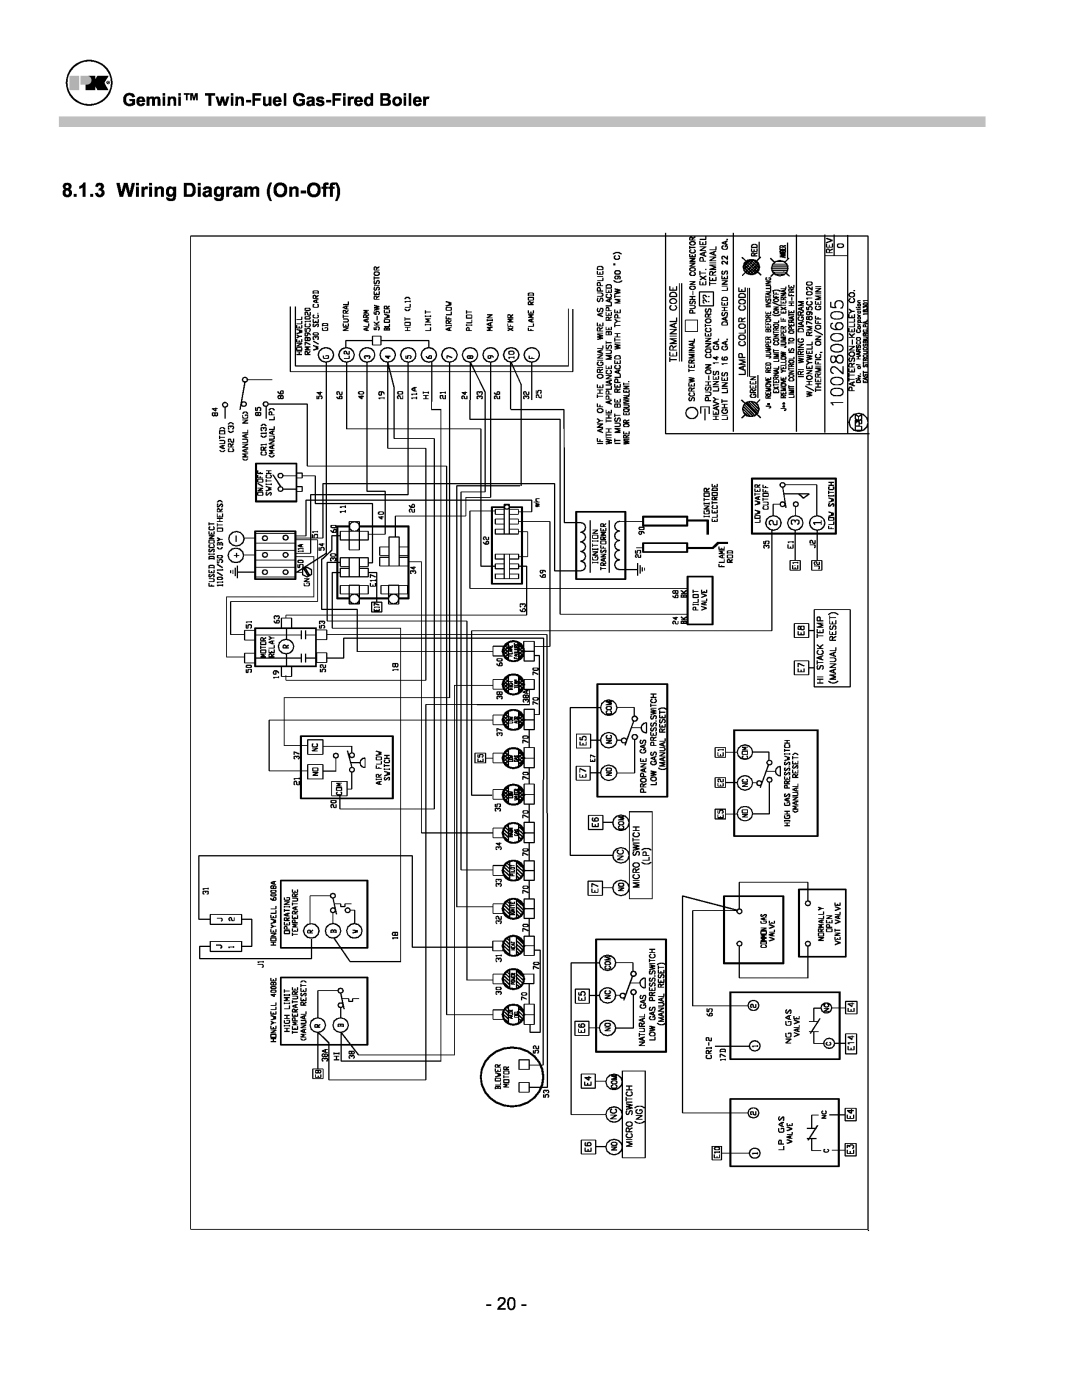 Patterson-Kelley TBIG-03 owner manual Wiring Diagram On-Off, Gemini Twin-Fuel Gas-FiredBoiler 